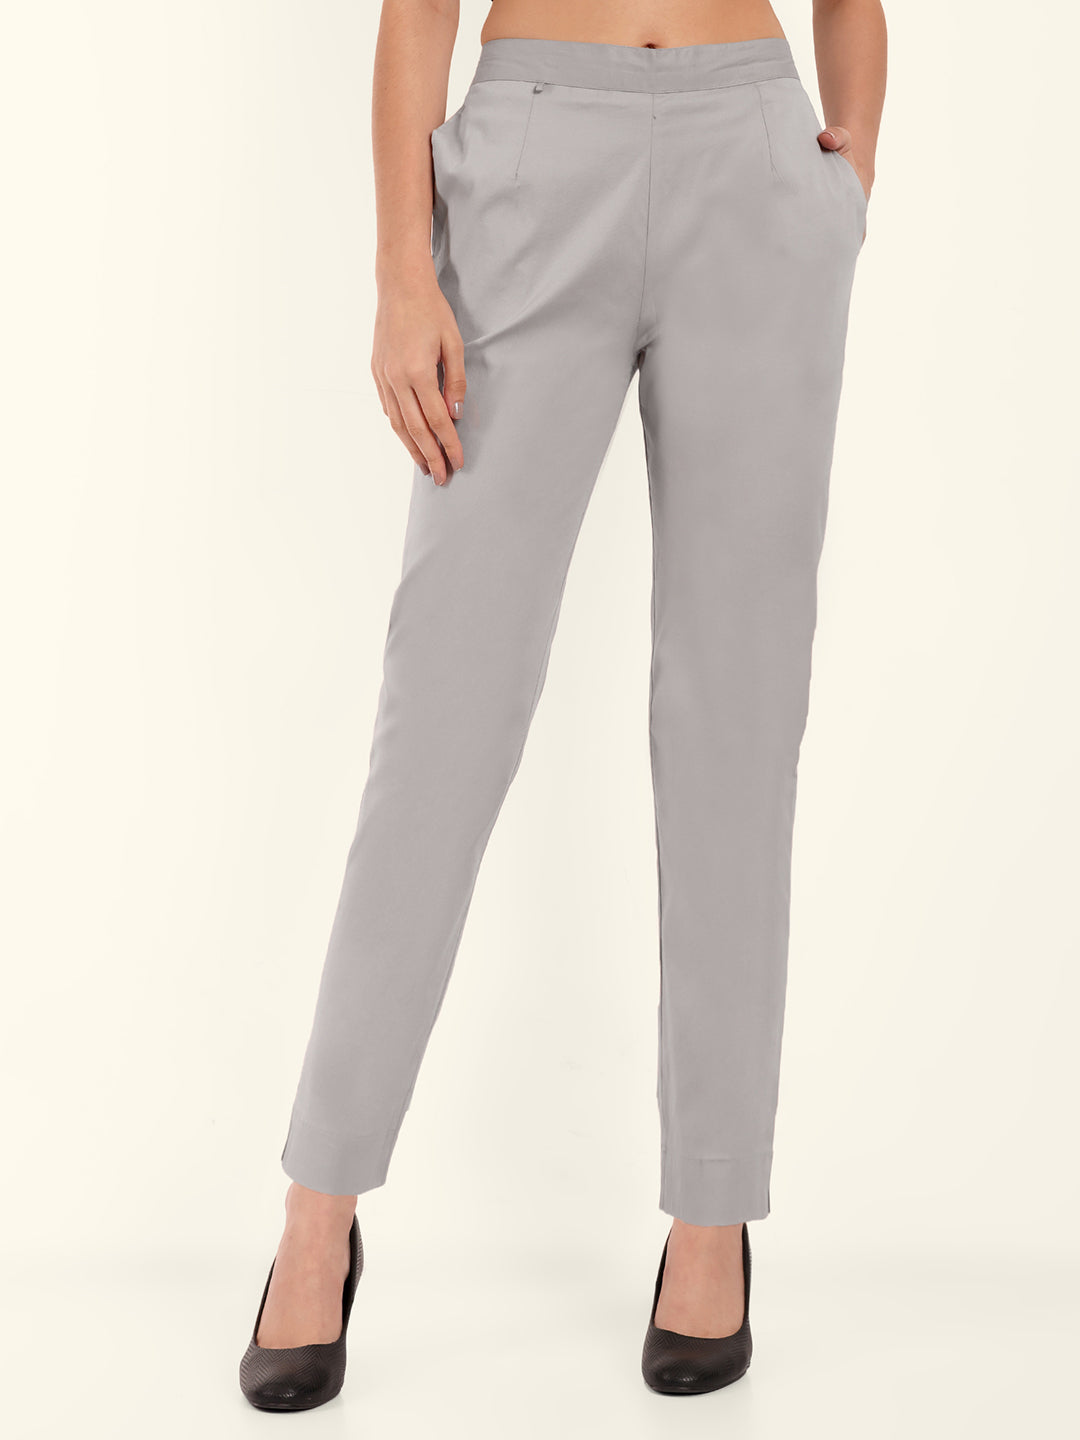 Naariy Light Grey Stretchable Cotton Pant